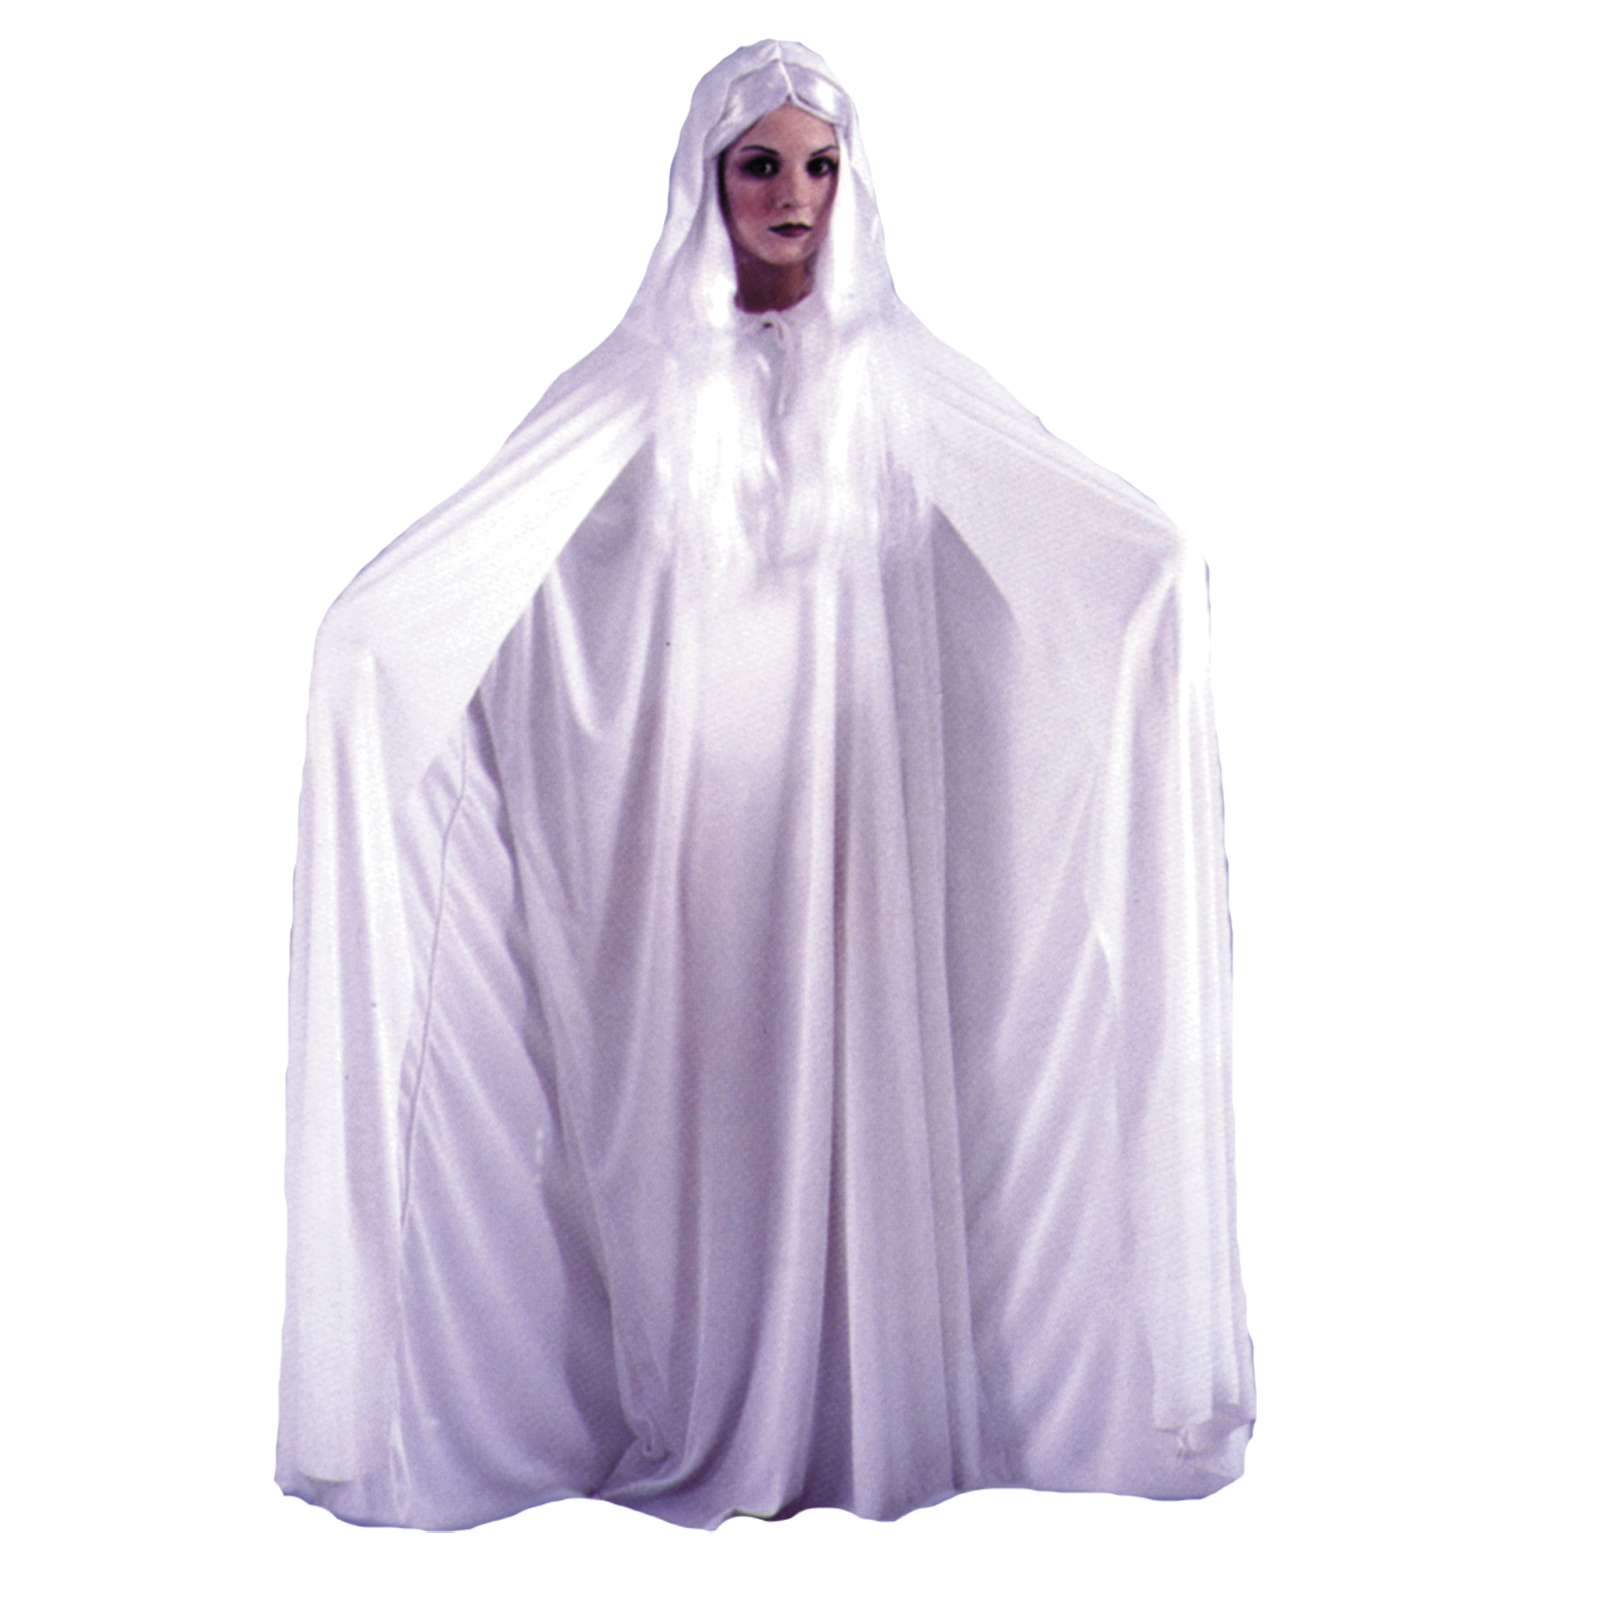 Cape 68 Inch Hooded White Costume Accessory